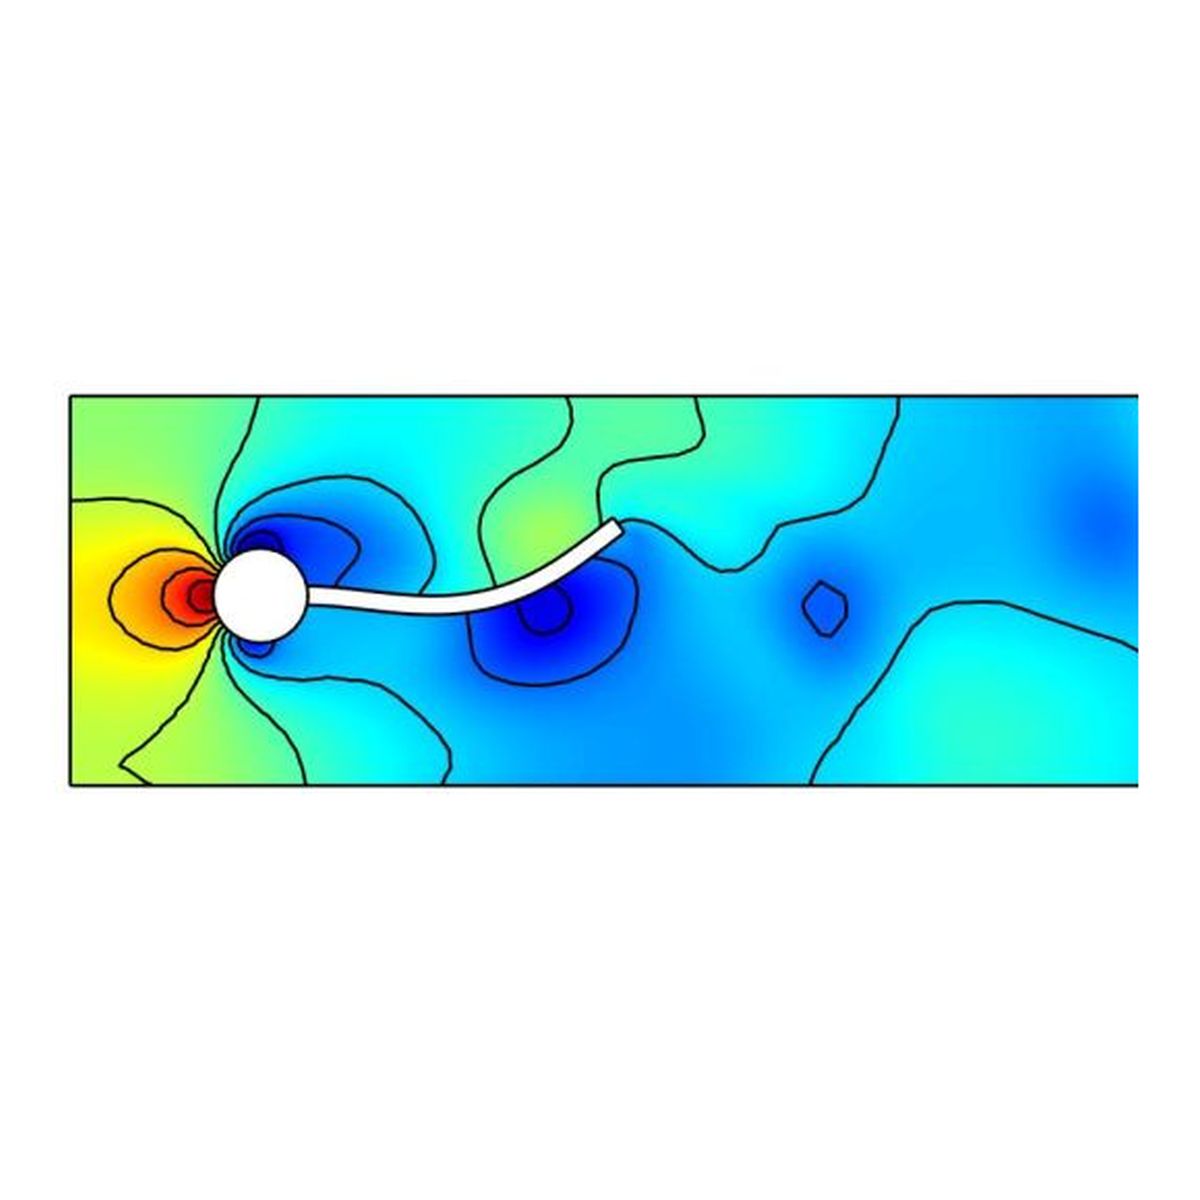 Fluid-Structure Interaction - Elastic Beam